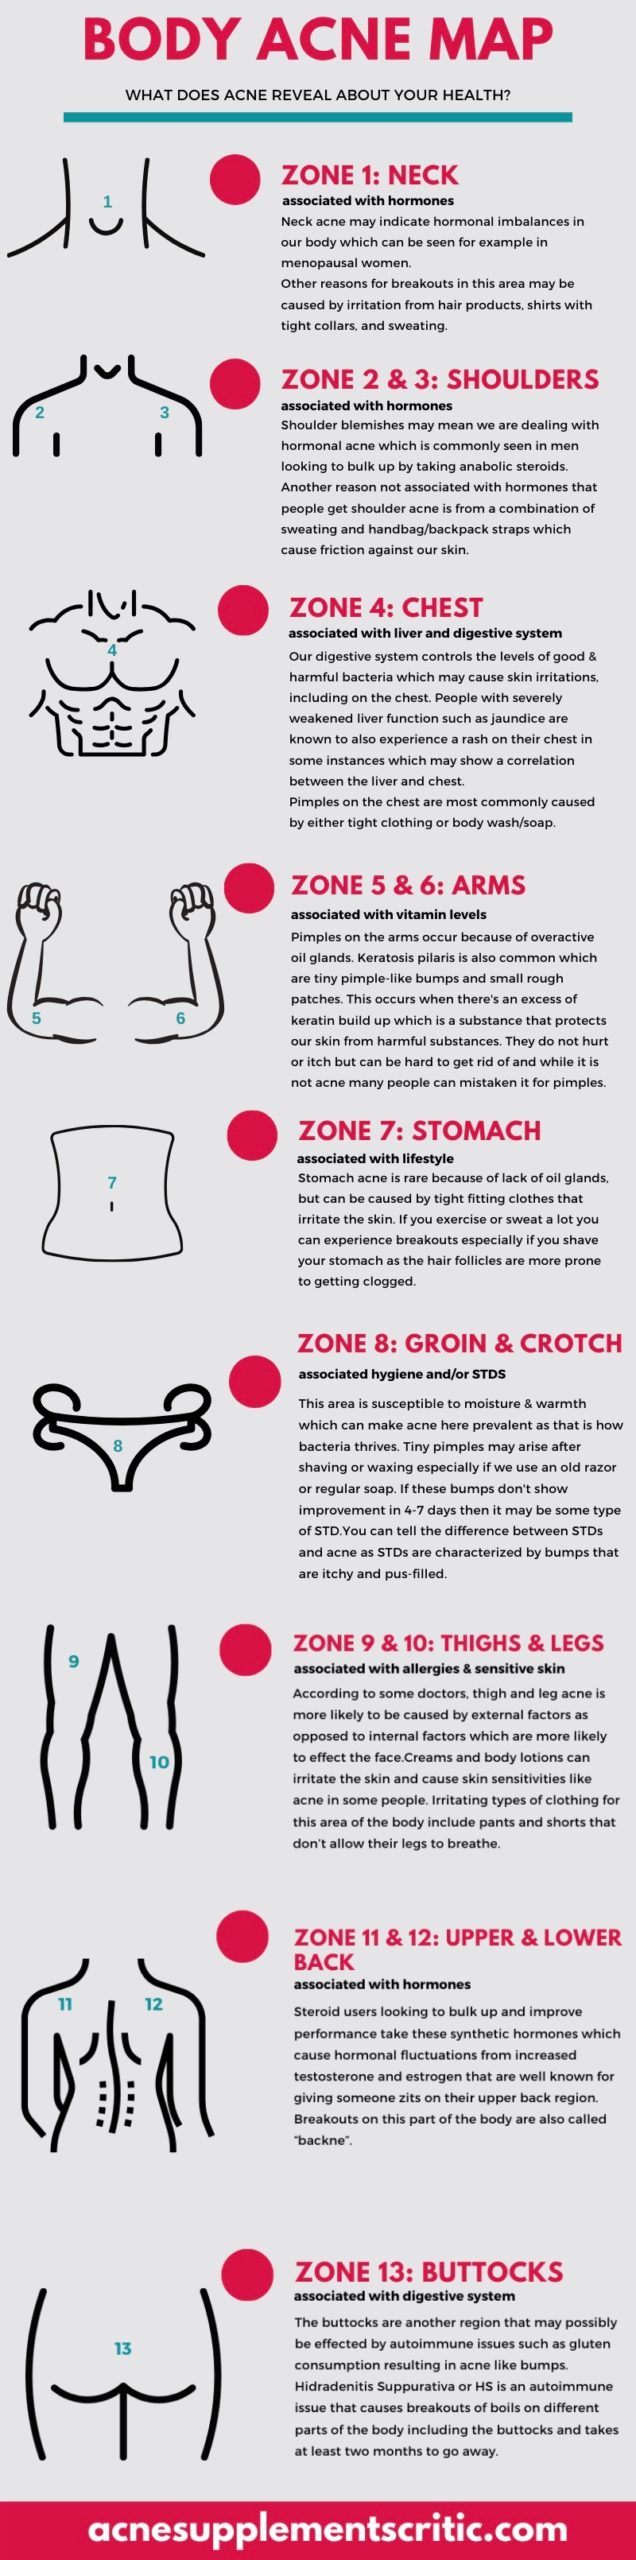 body acne map